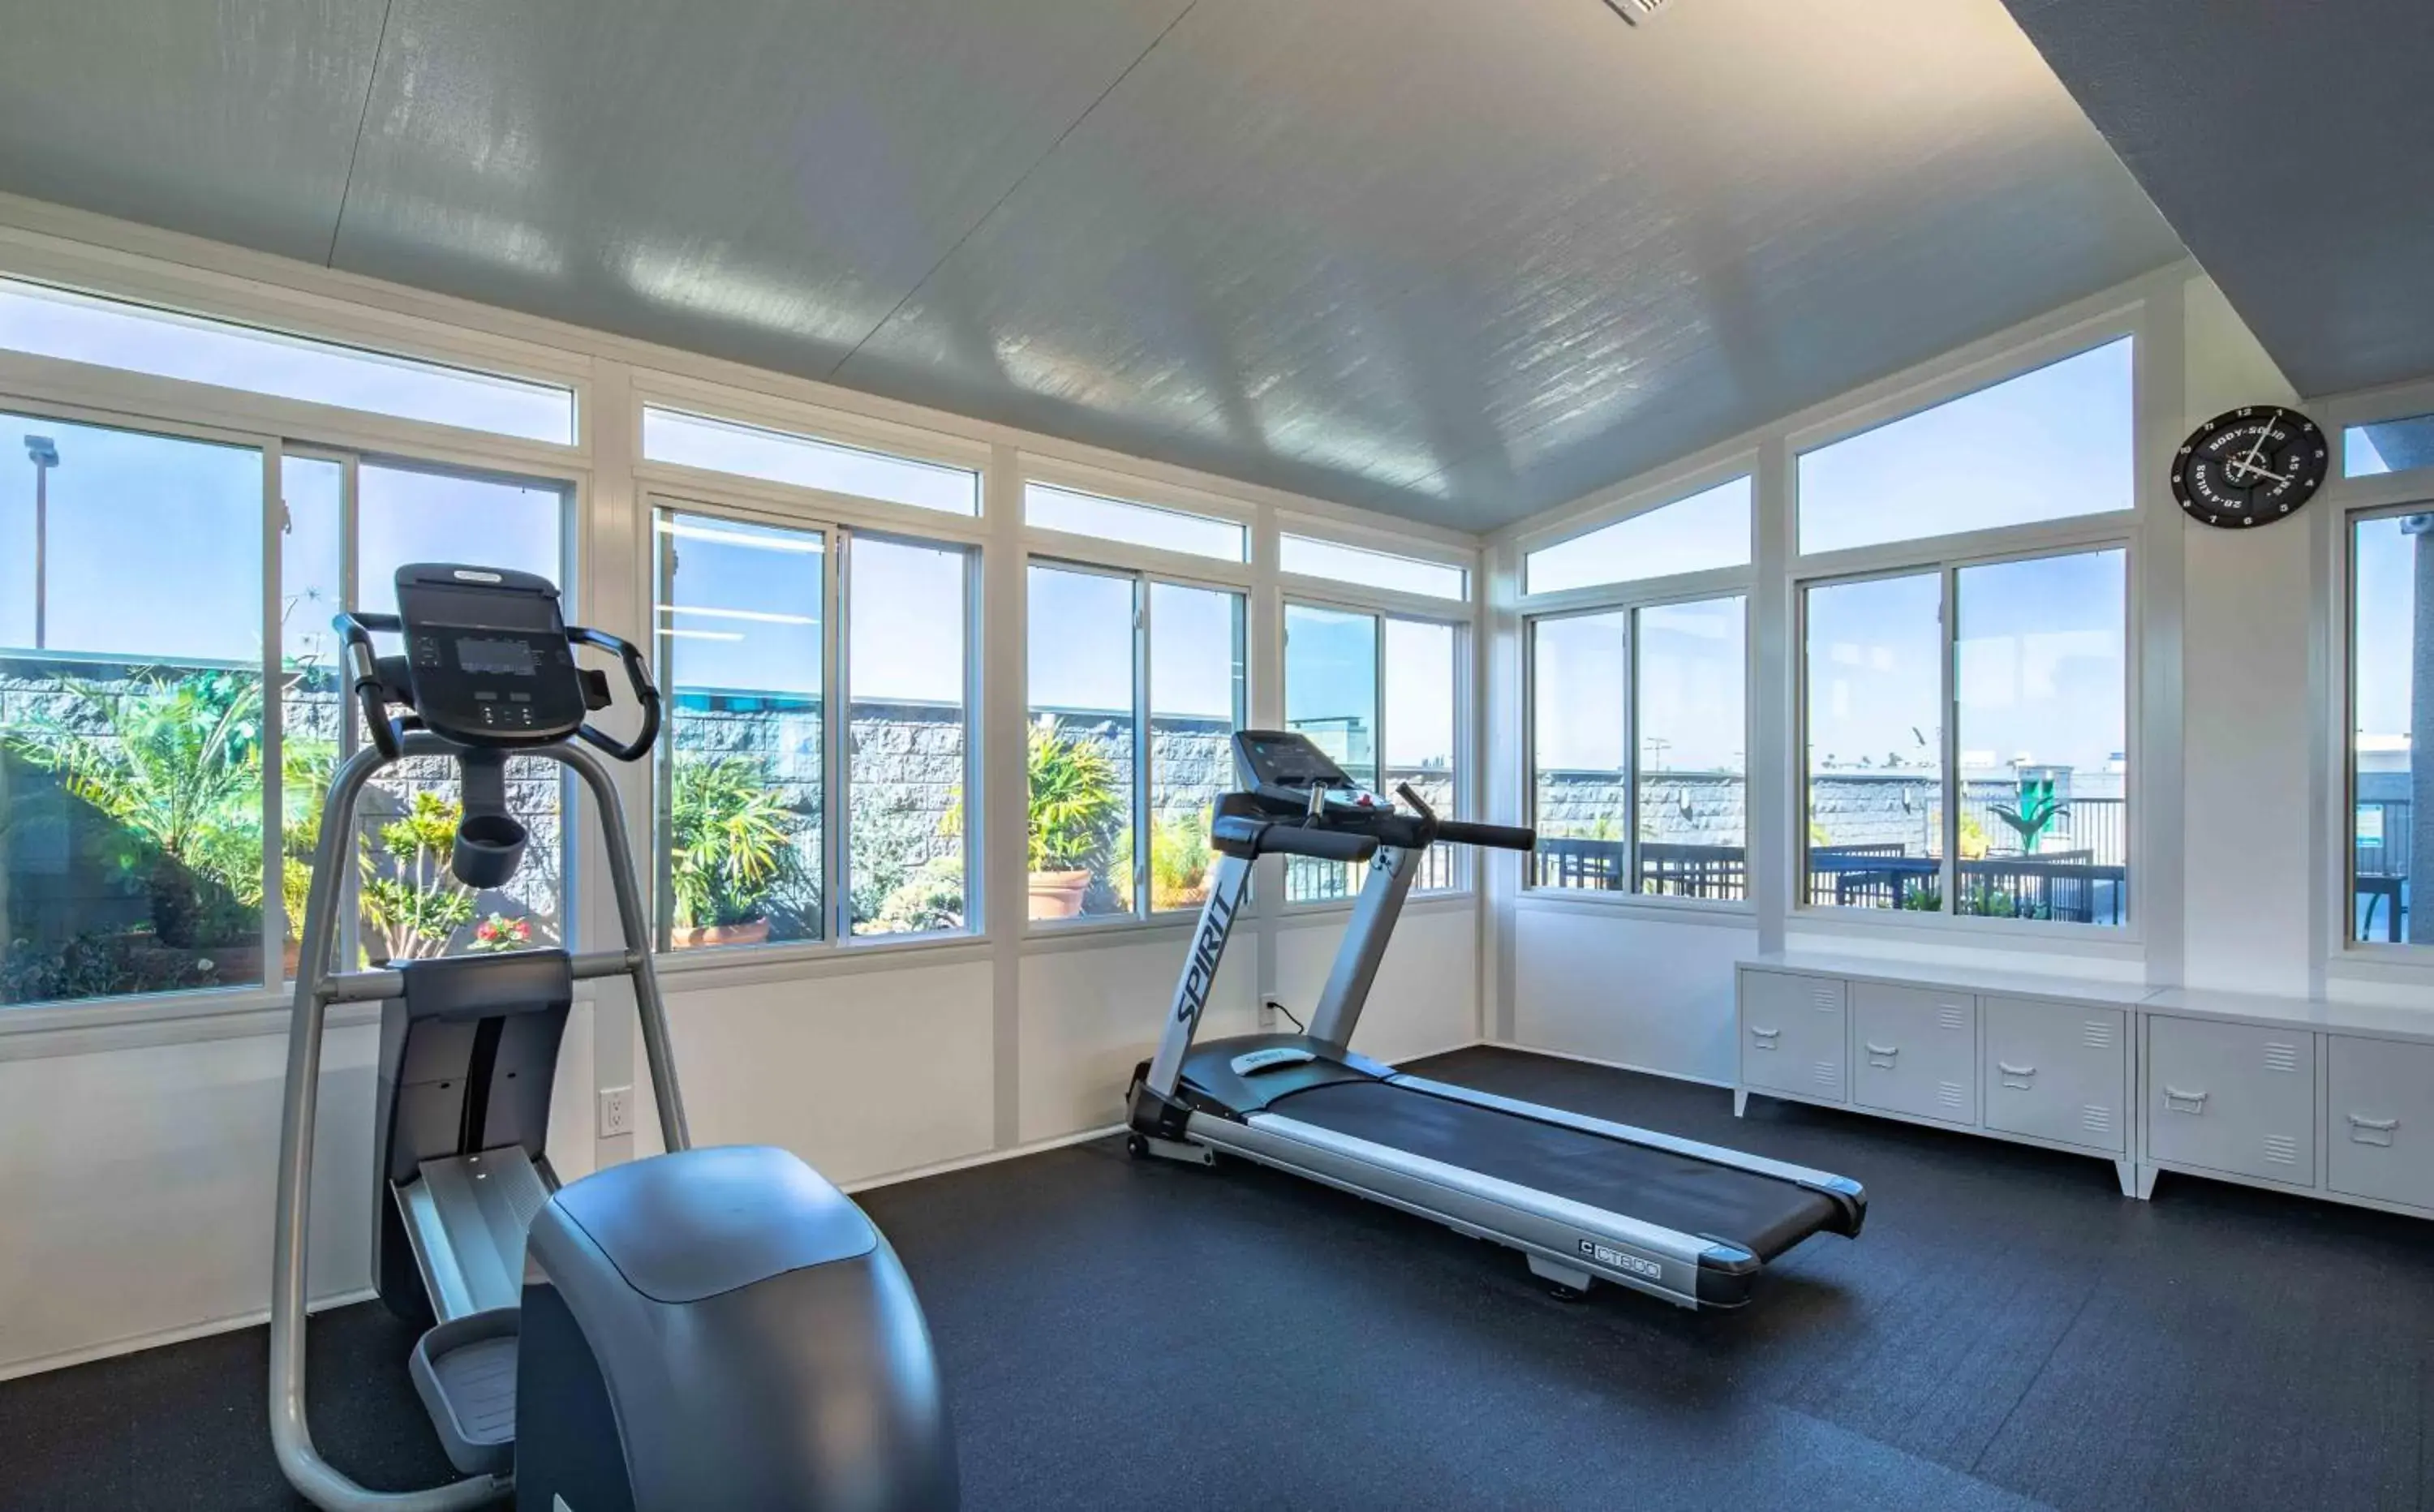 Fitness centre/facilities, Fitness Center/Facilities in New Gardena Hotel